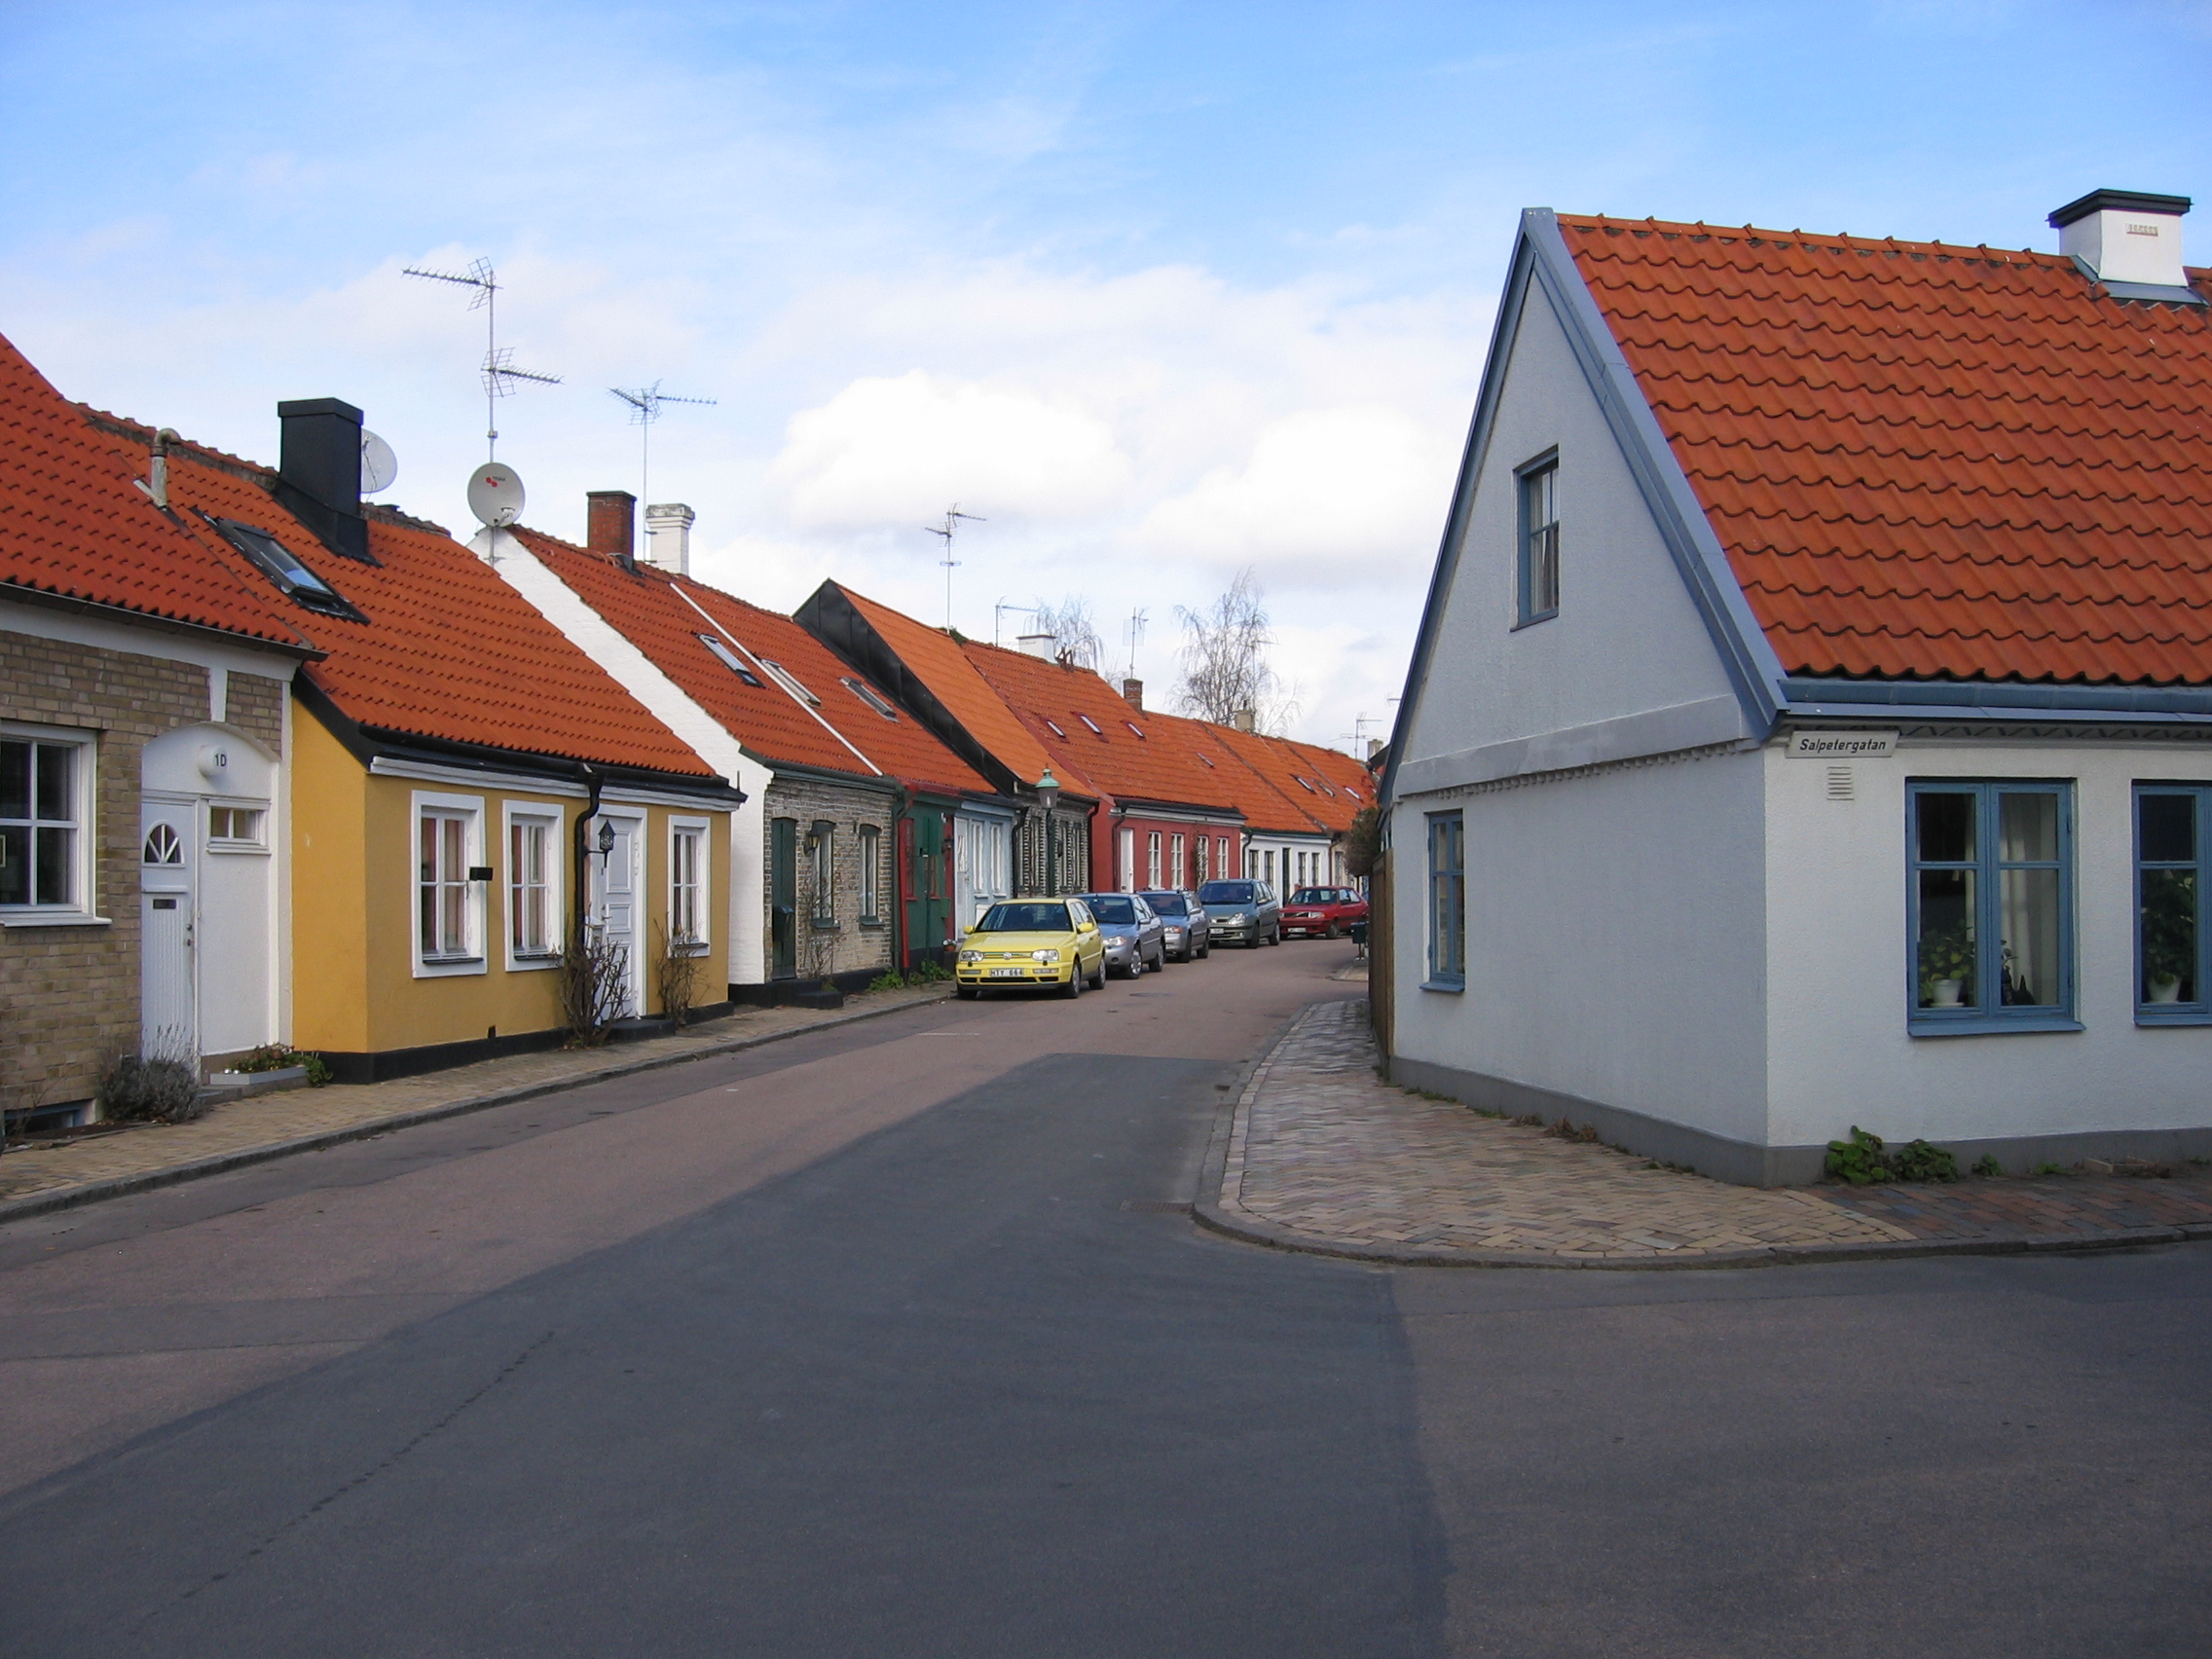 File:Gamla Landskrona.JPG - Wikimedia Commons